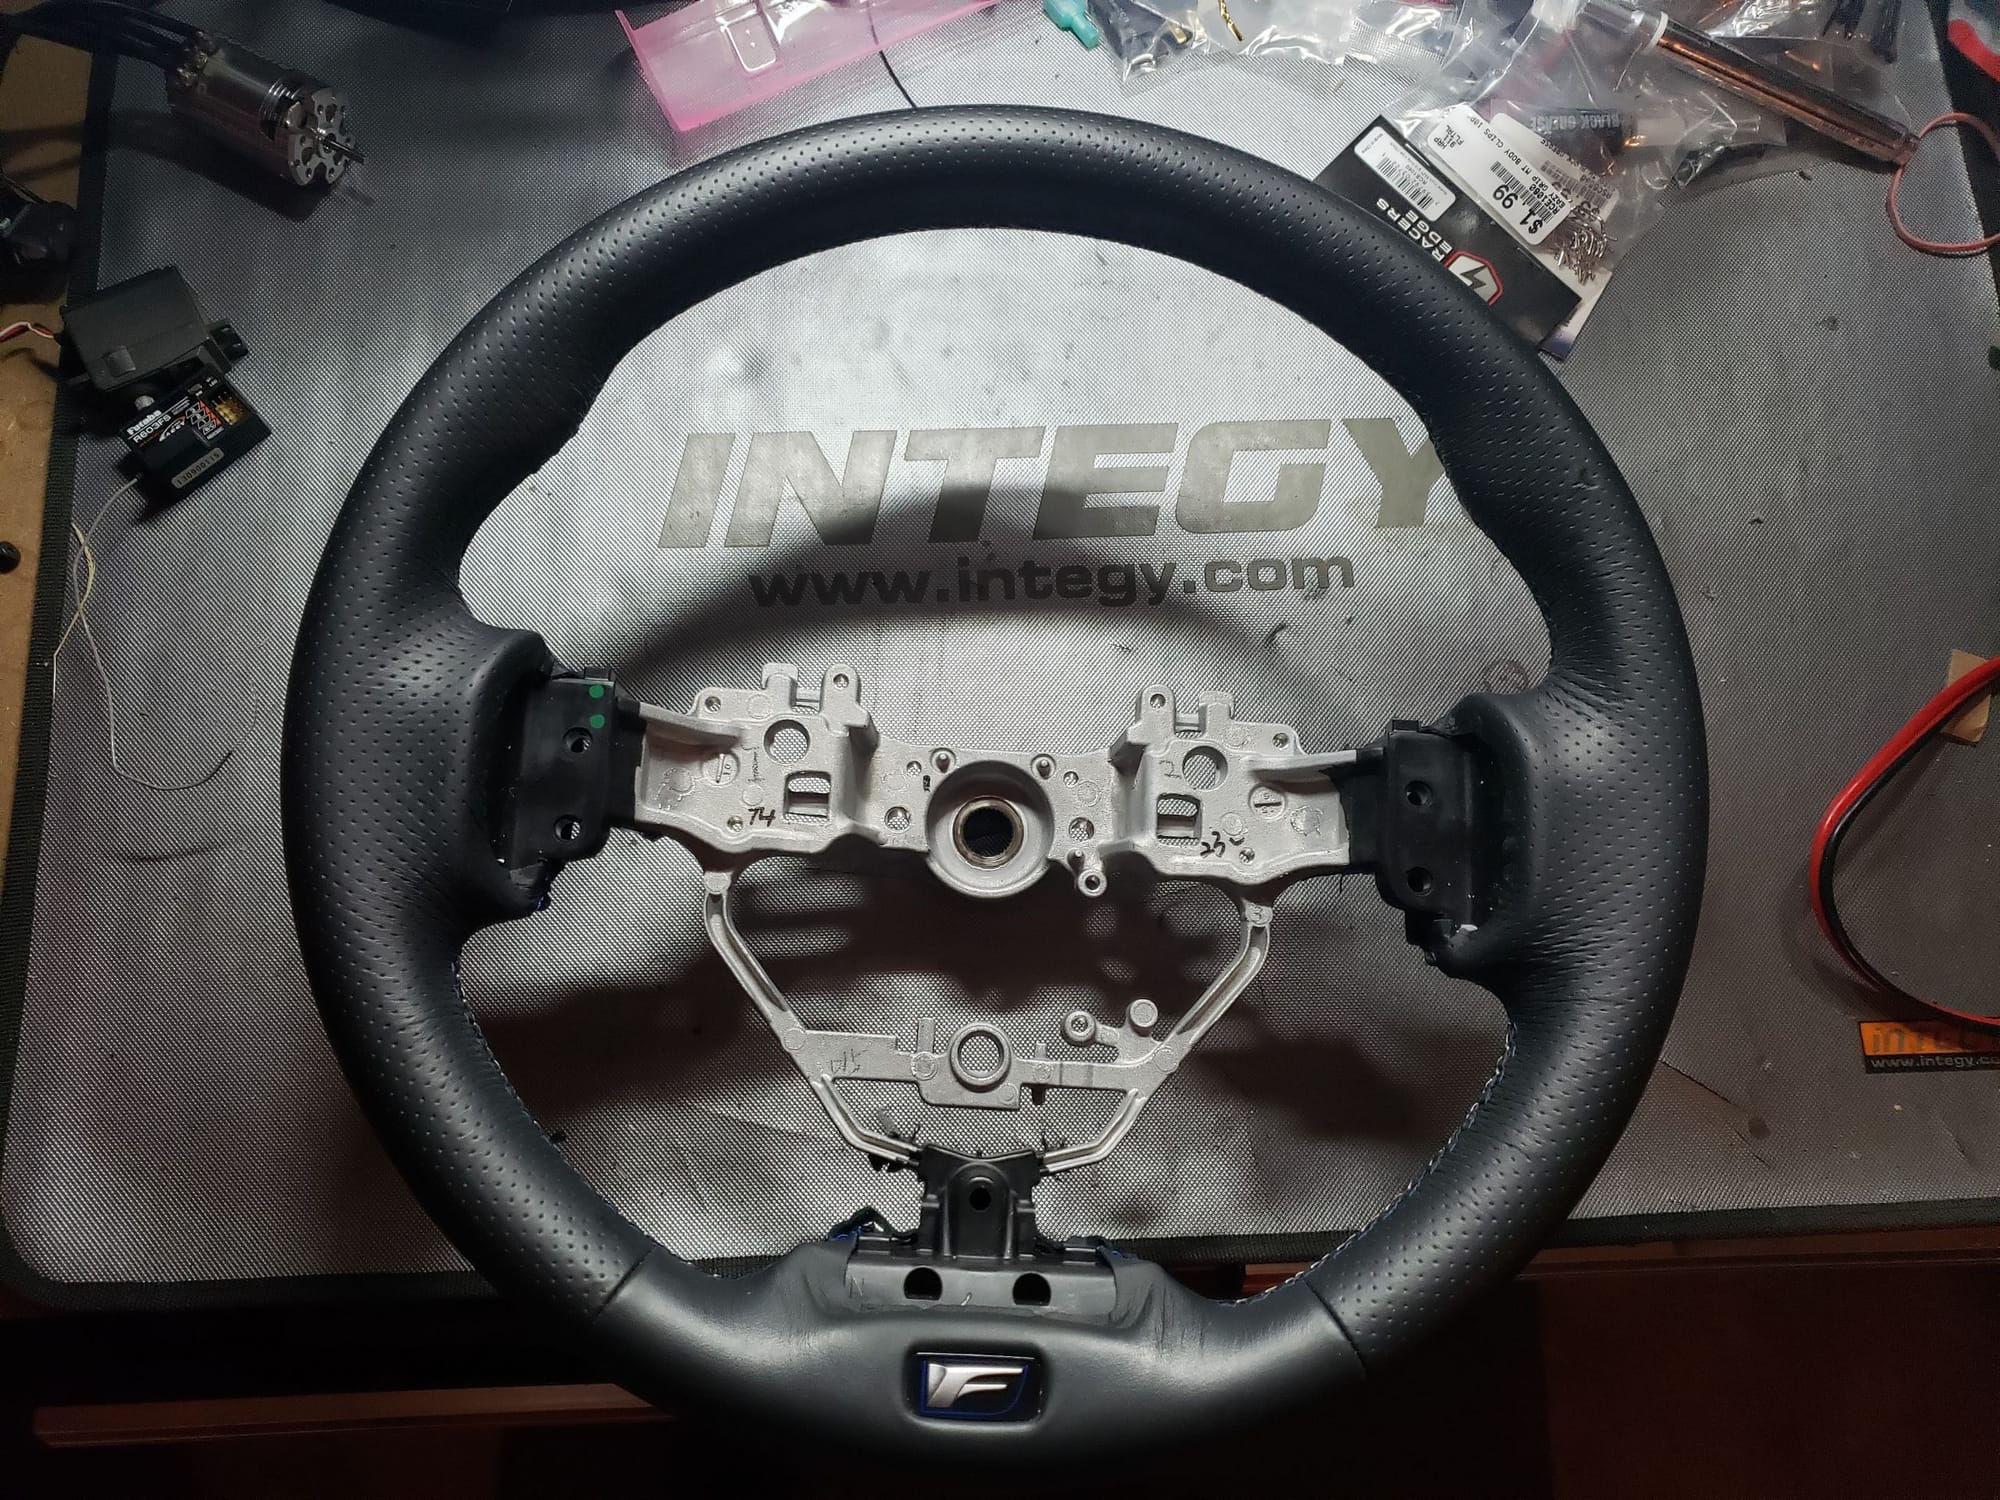 Interior/Upholstery - FS: OEM Lexus RC-F Steering Wheel 2015 w/ F Emblem and Center Garnish w/ Carbon Fiber - Used - 2015 to 2019 Lexus RC F - Dothan, AL 36301, United States